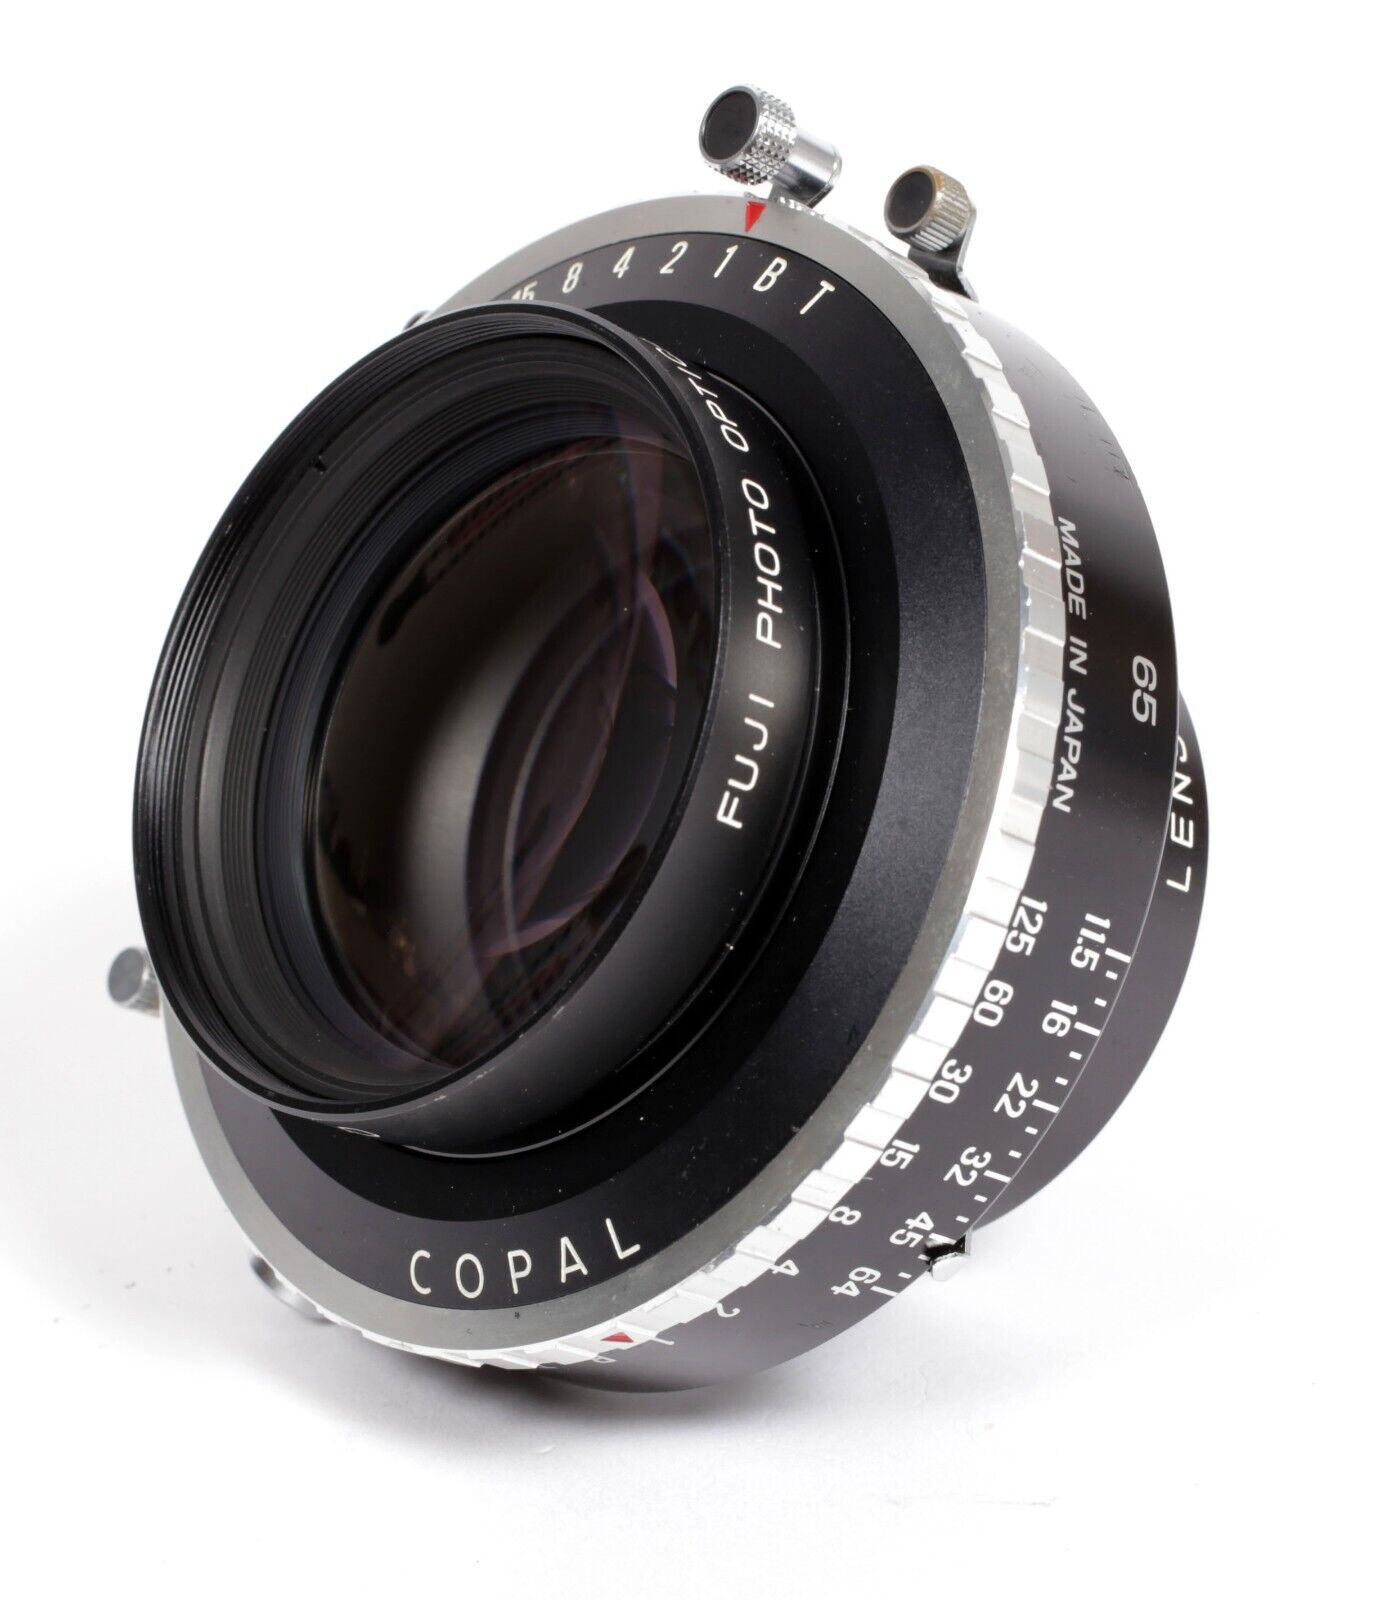 Fuji Fujinon C 600mm F11.5 lens in Copal #3 shutter #068